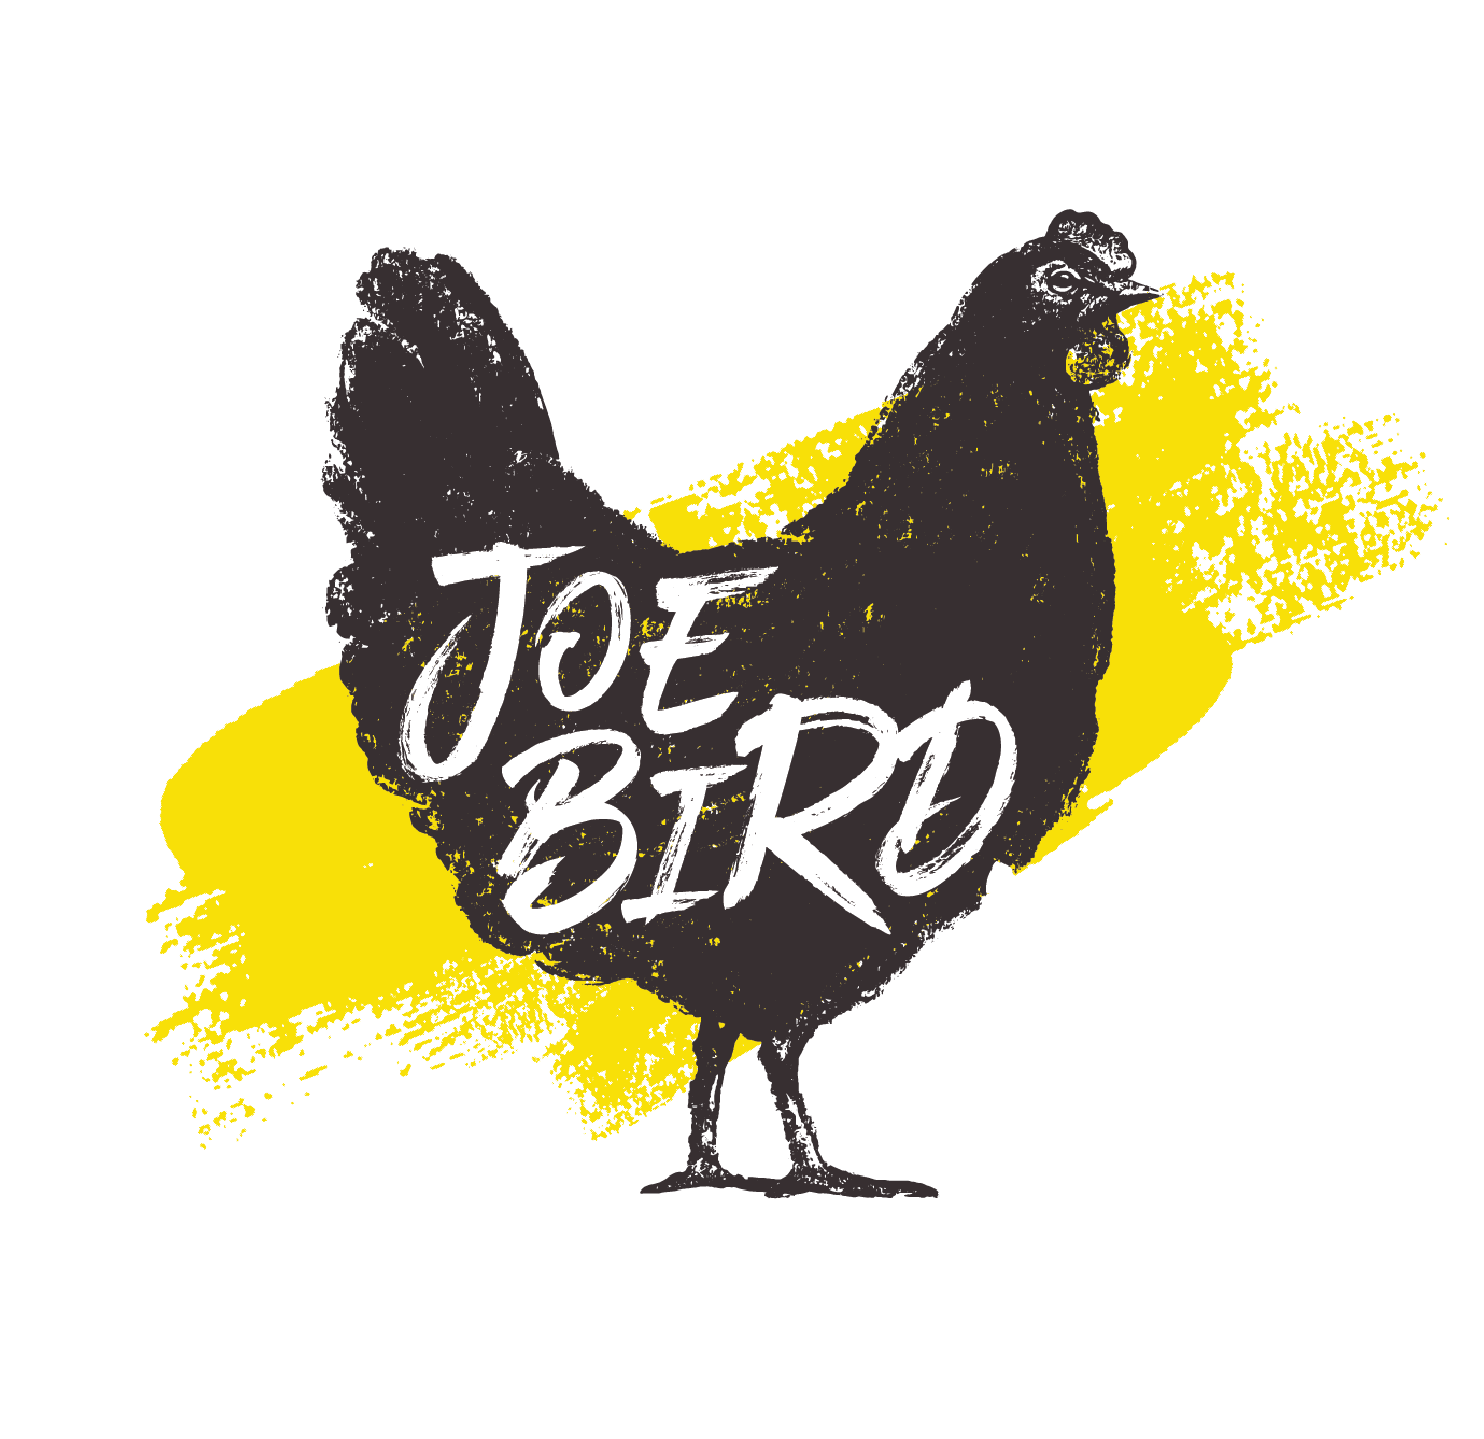 Joe Bird